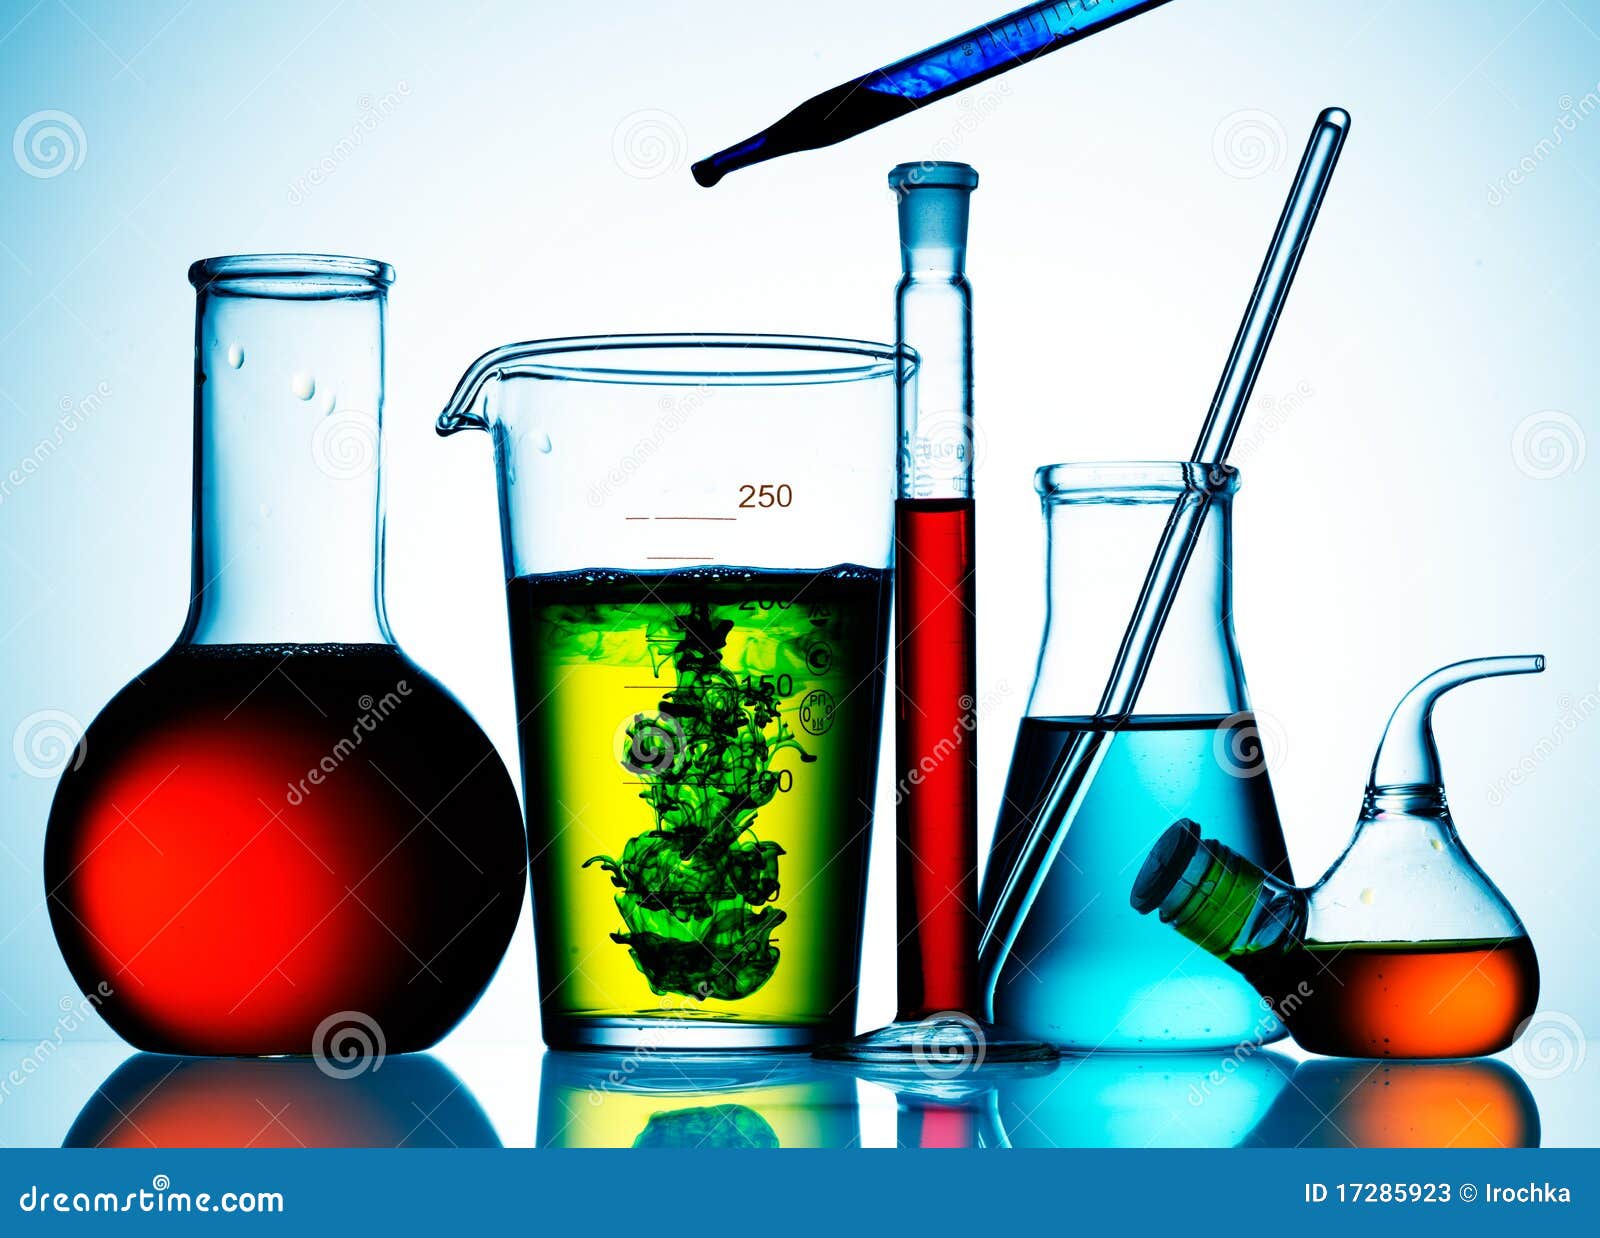 glass lab beakers and liquids